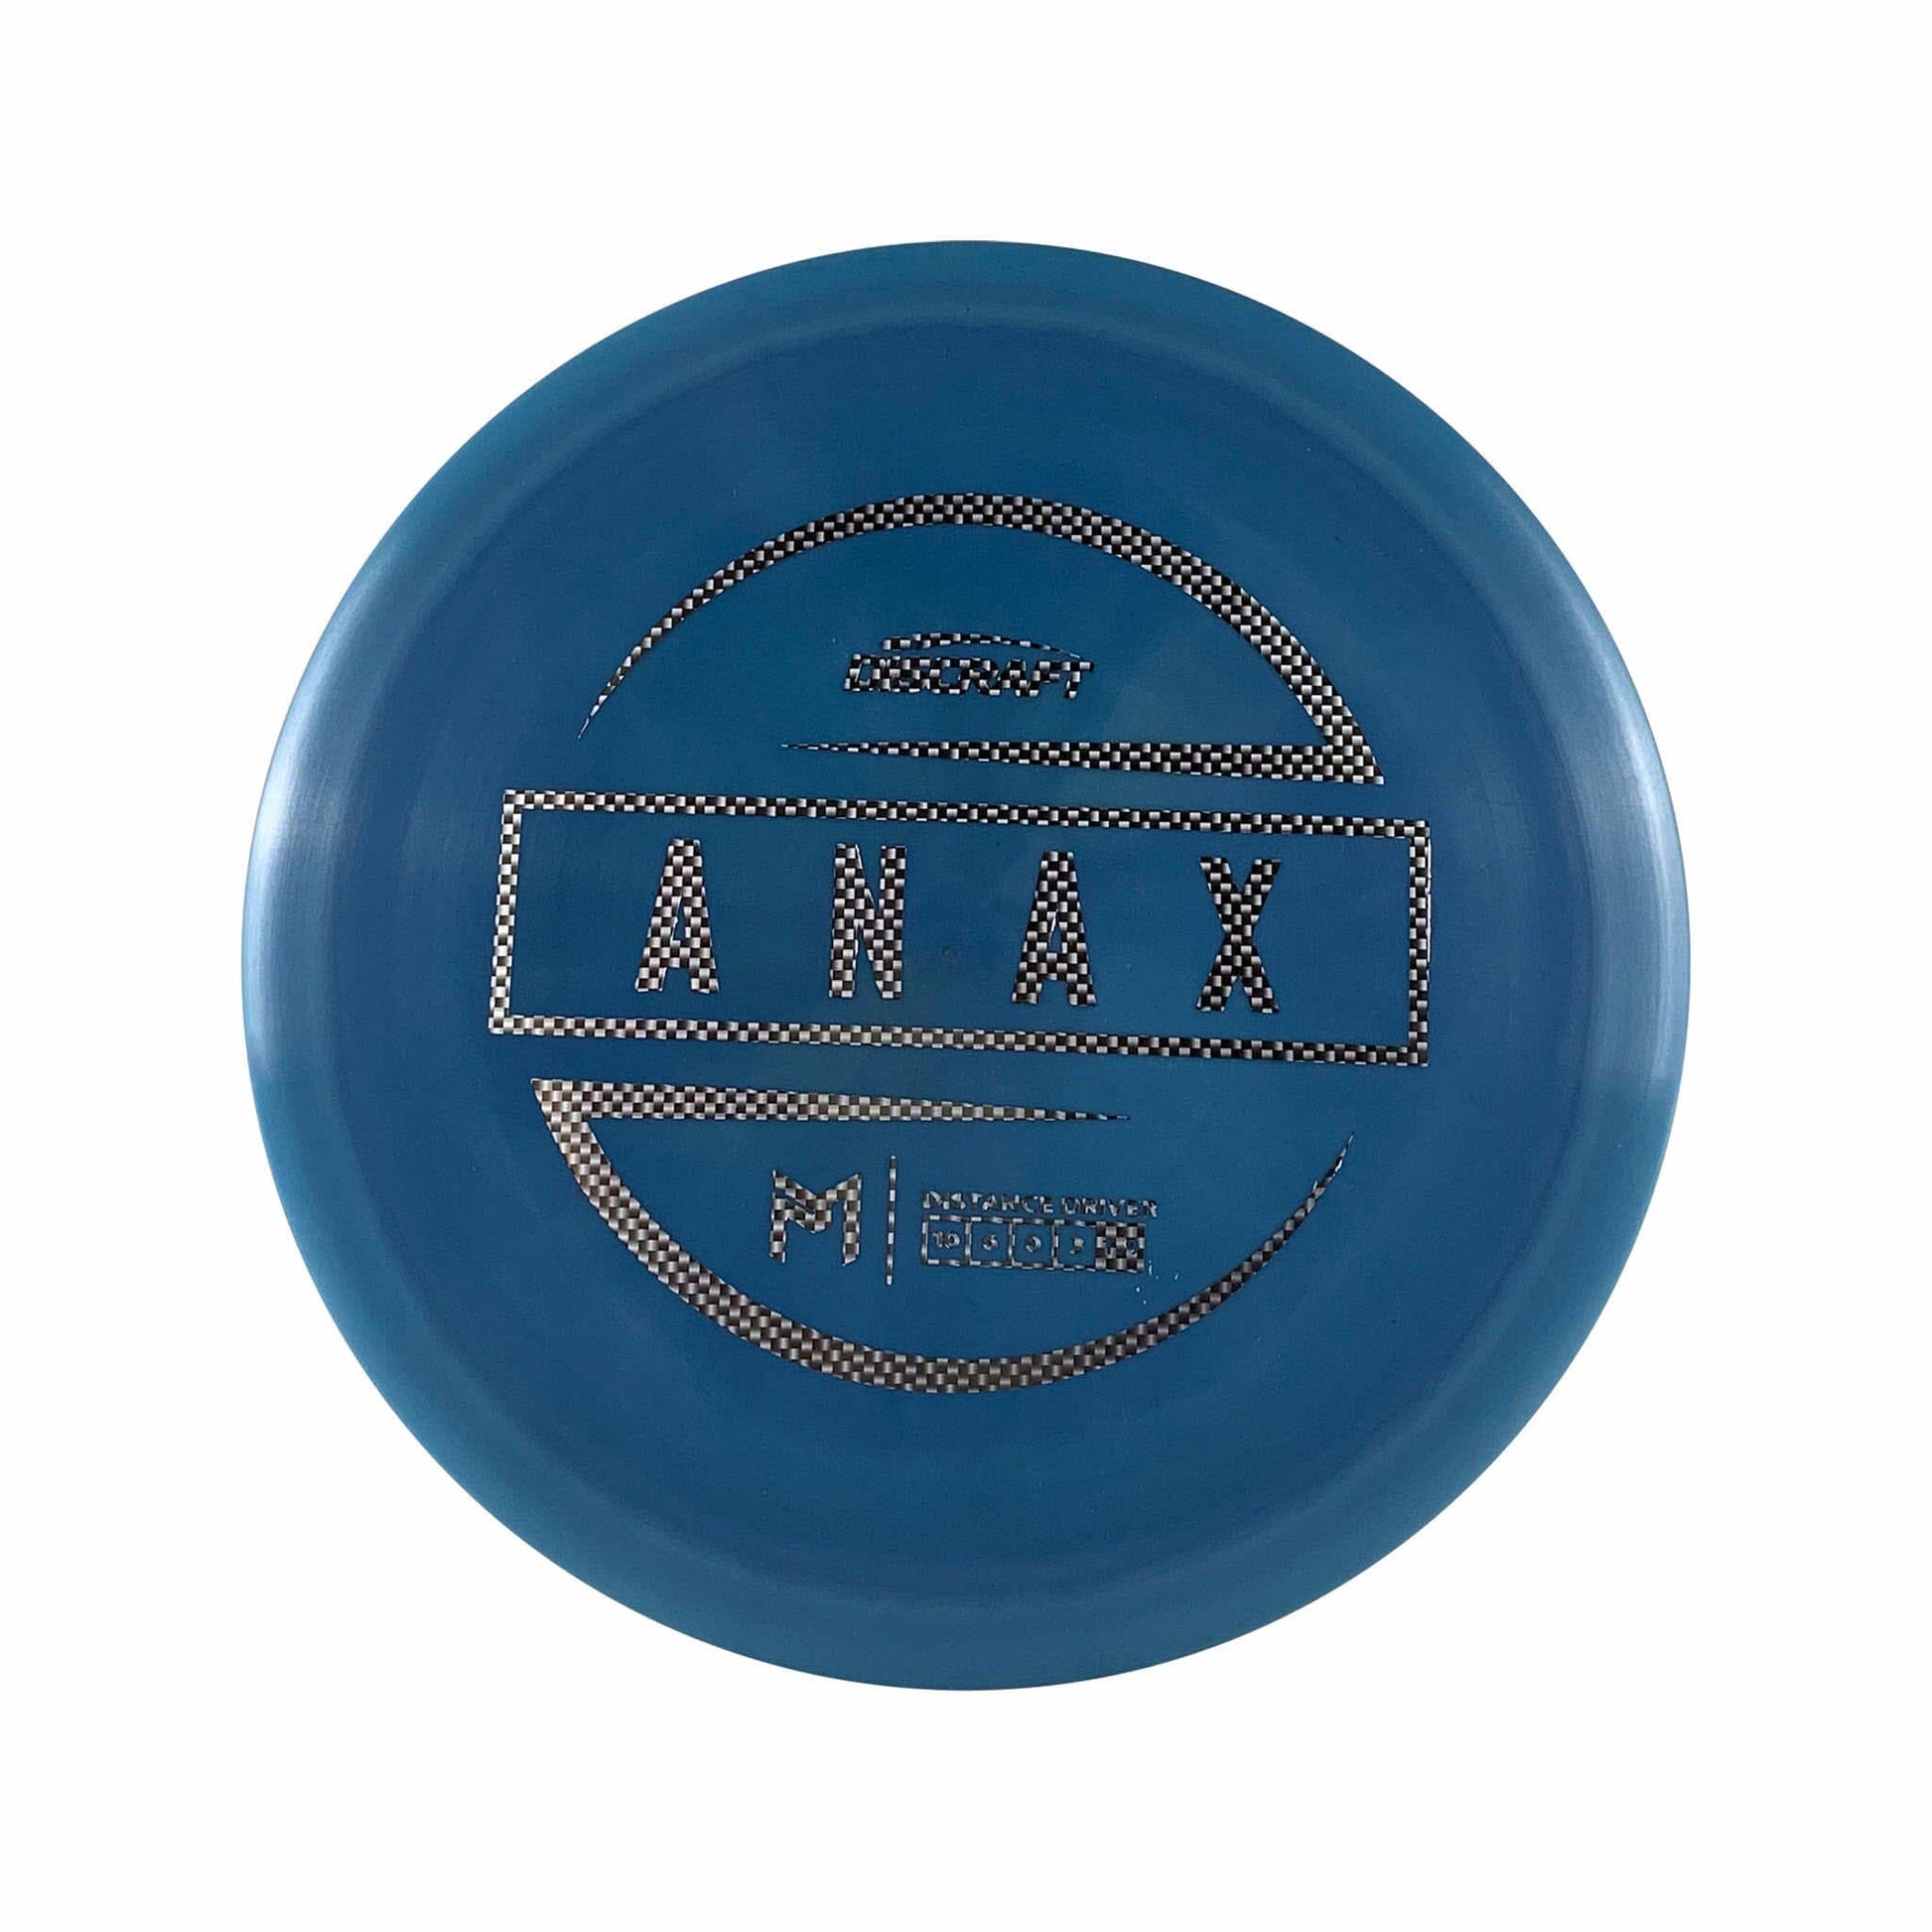 ESP Anax - Paul McBeth Disc Discraft blue 170 